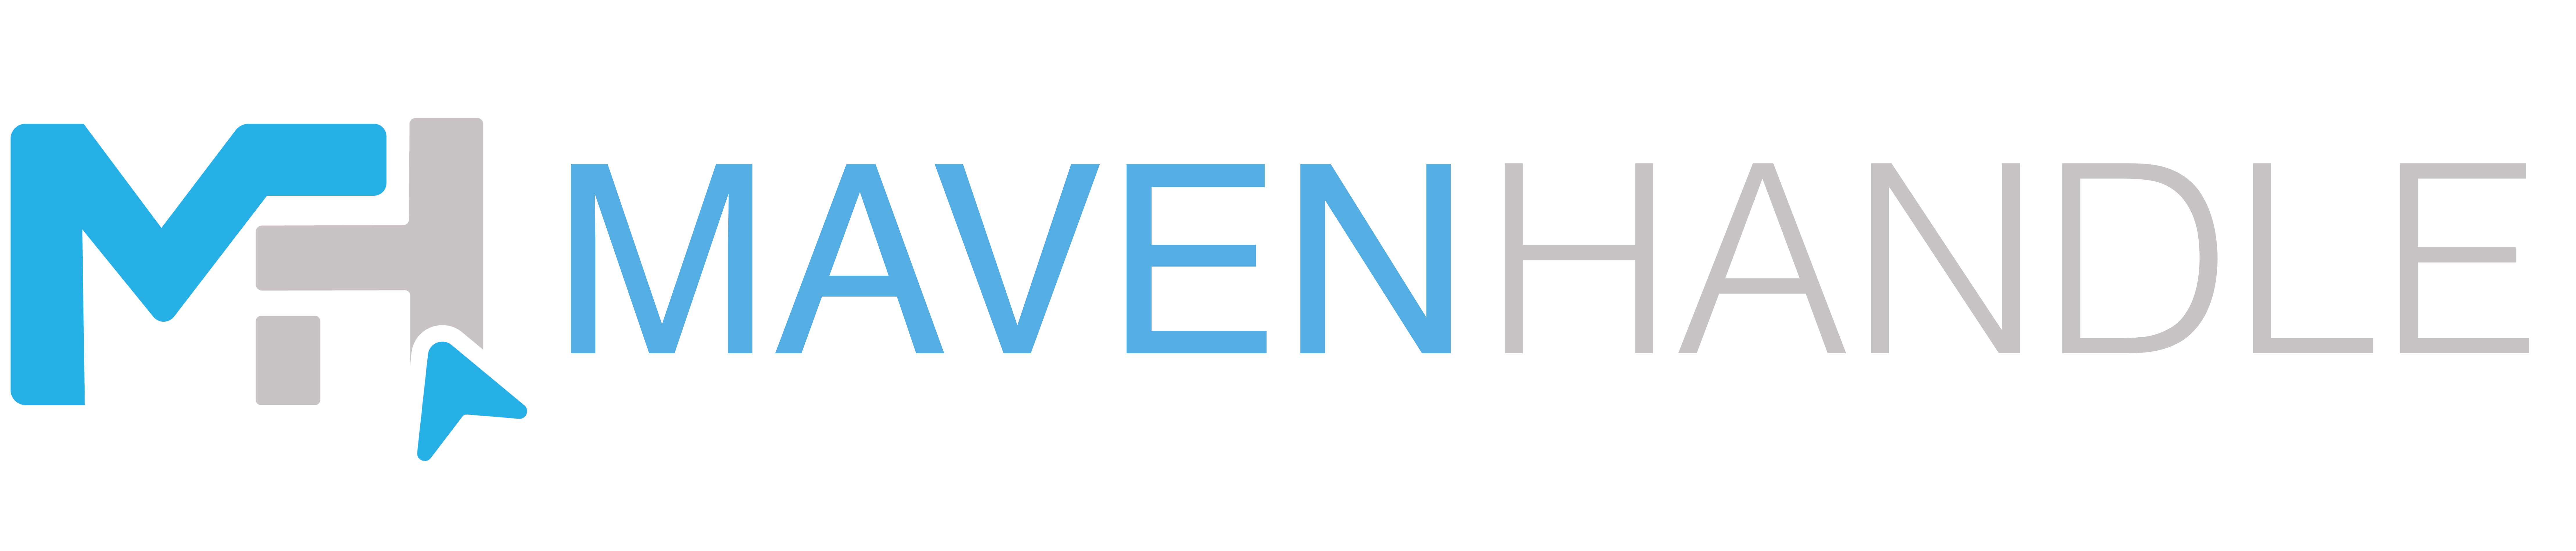 MavenHandle logo full